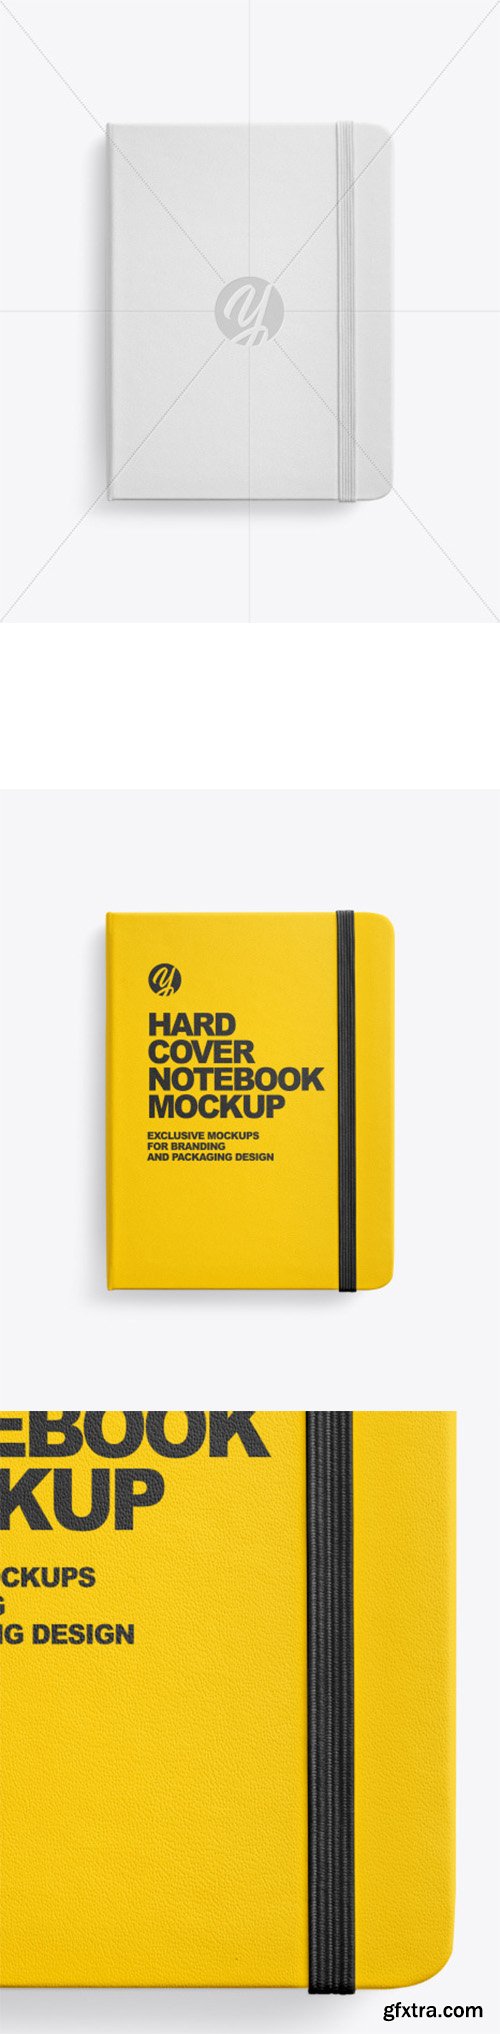 Notebook Mockup 61303